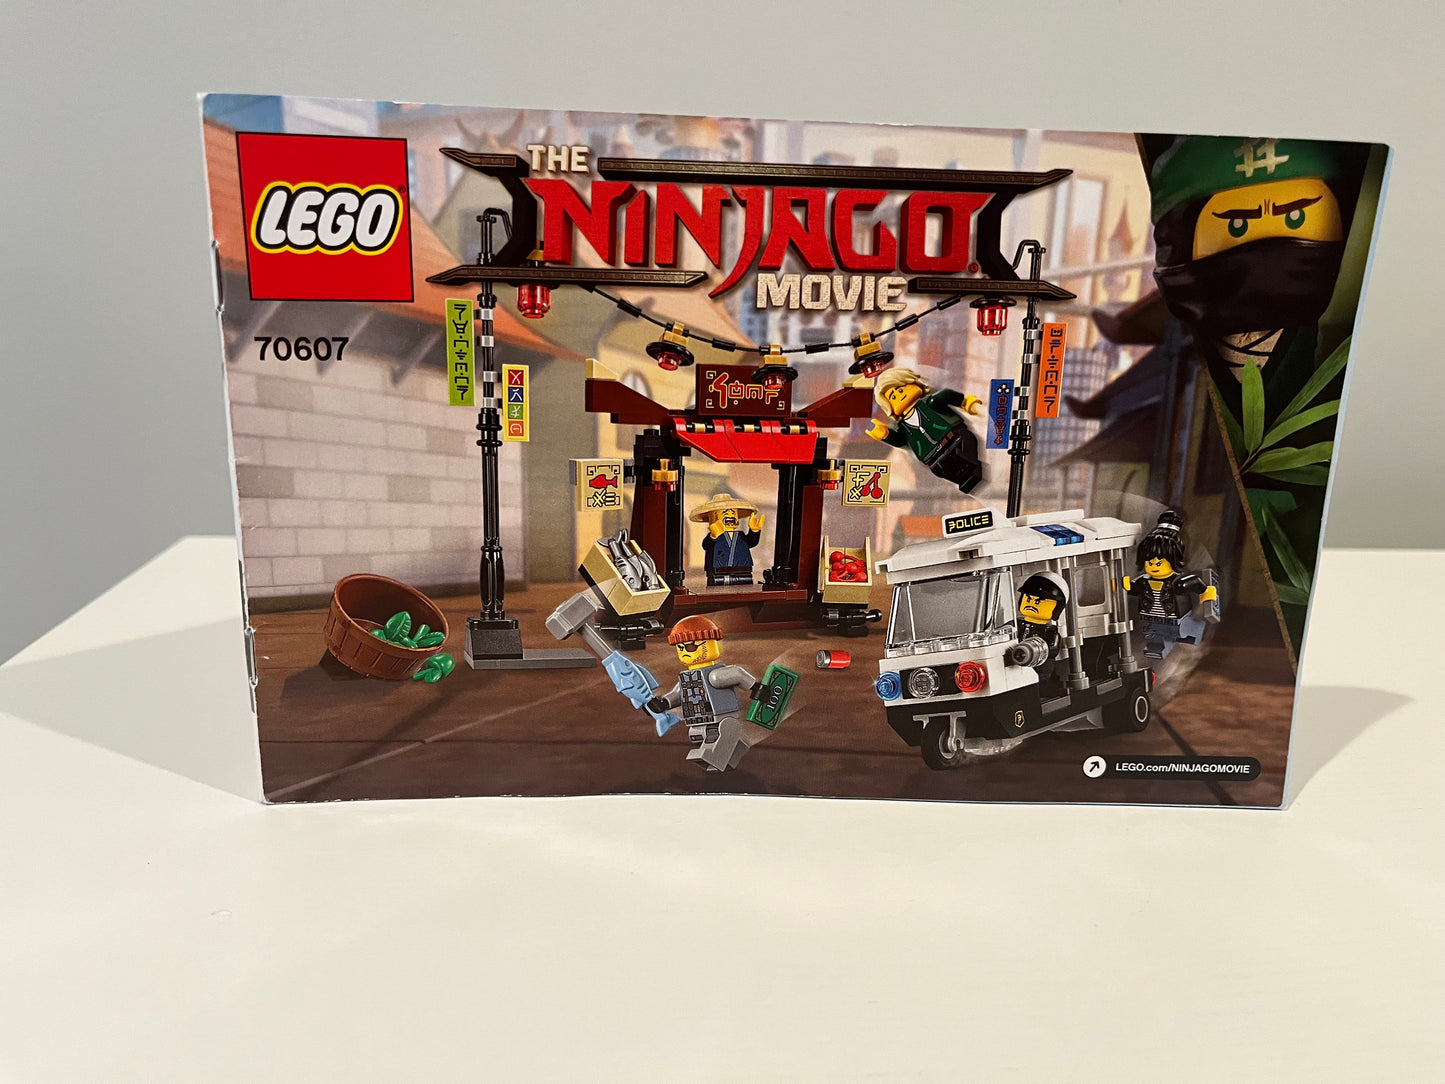 PPU 45241 (Evendale/Blue Ash) Lego Set - Lego Ninjago Move City Chase #70607